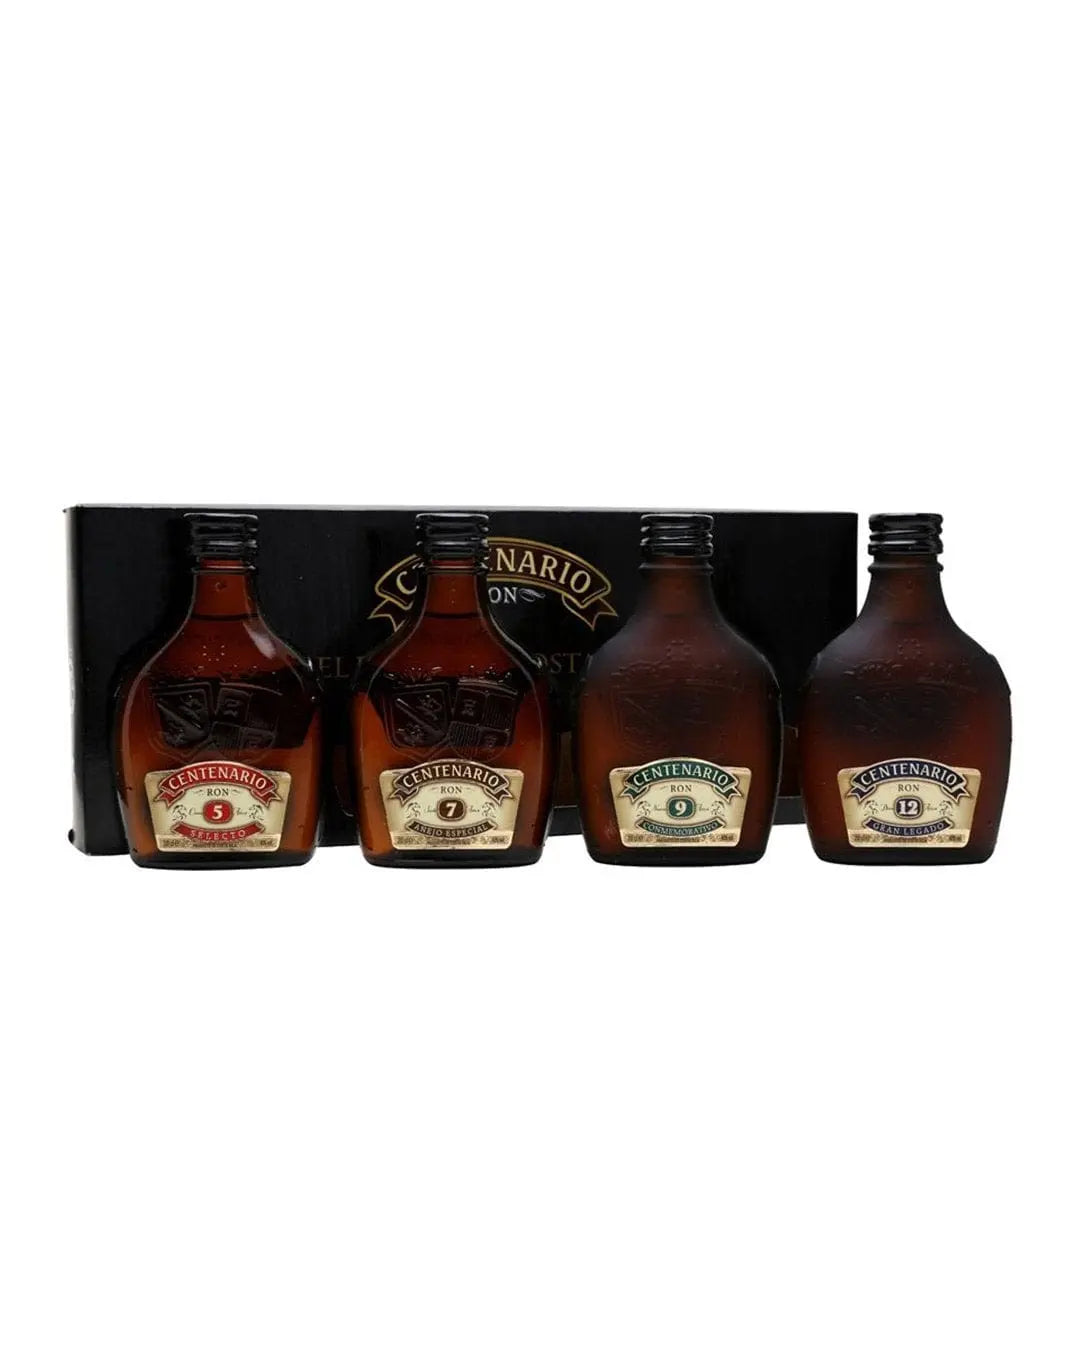 Ron Centenario Rum Collection (5, 7, 9, 12 Year Old), 4 x 20 cl Spirit Miniatures